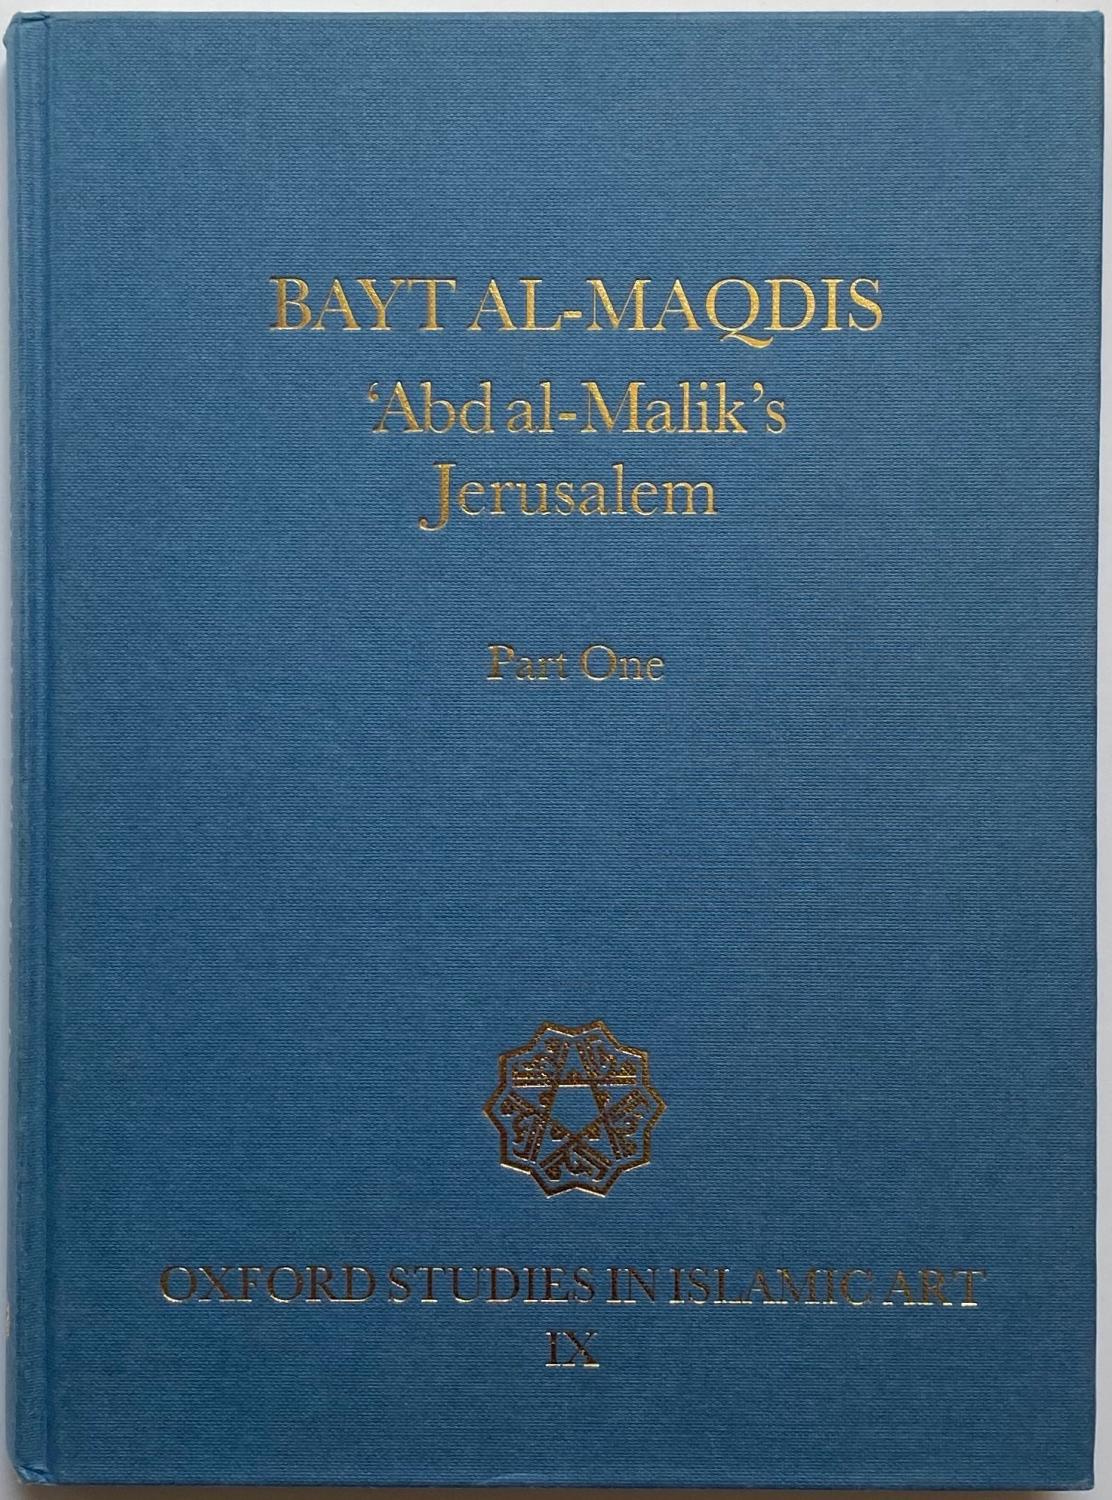 Bayt al-Maqdis: 'Abd al-Malik's Jerusalem, Part One - Julian Raby and Jeremy Johns (editors)